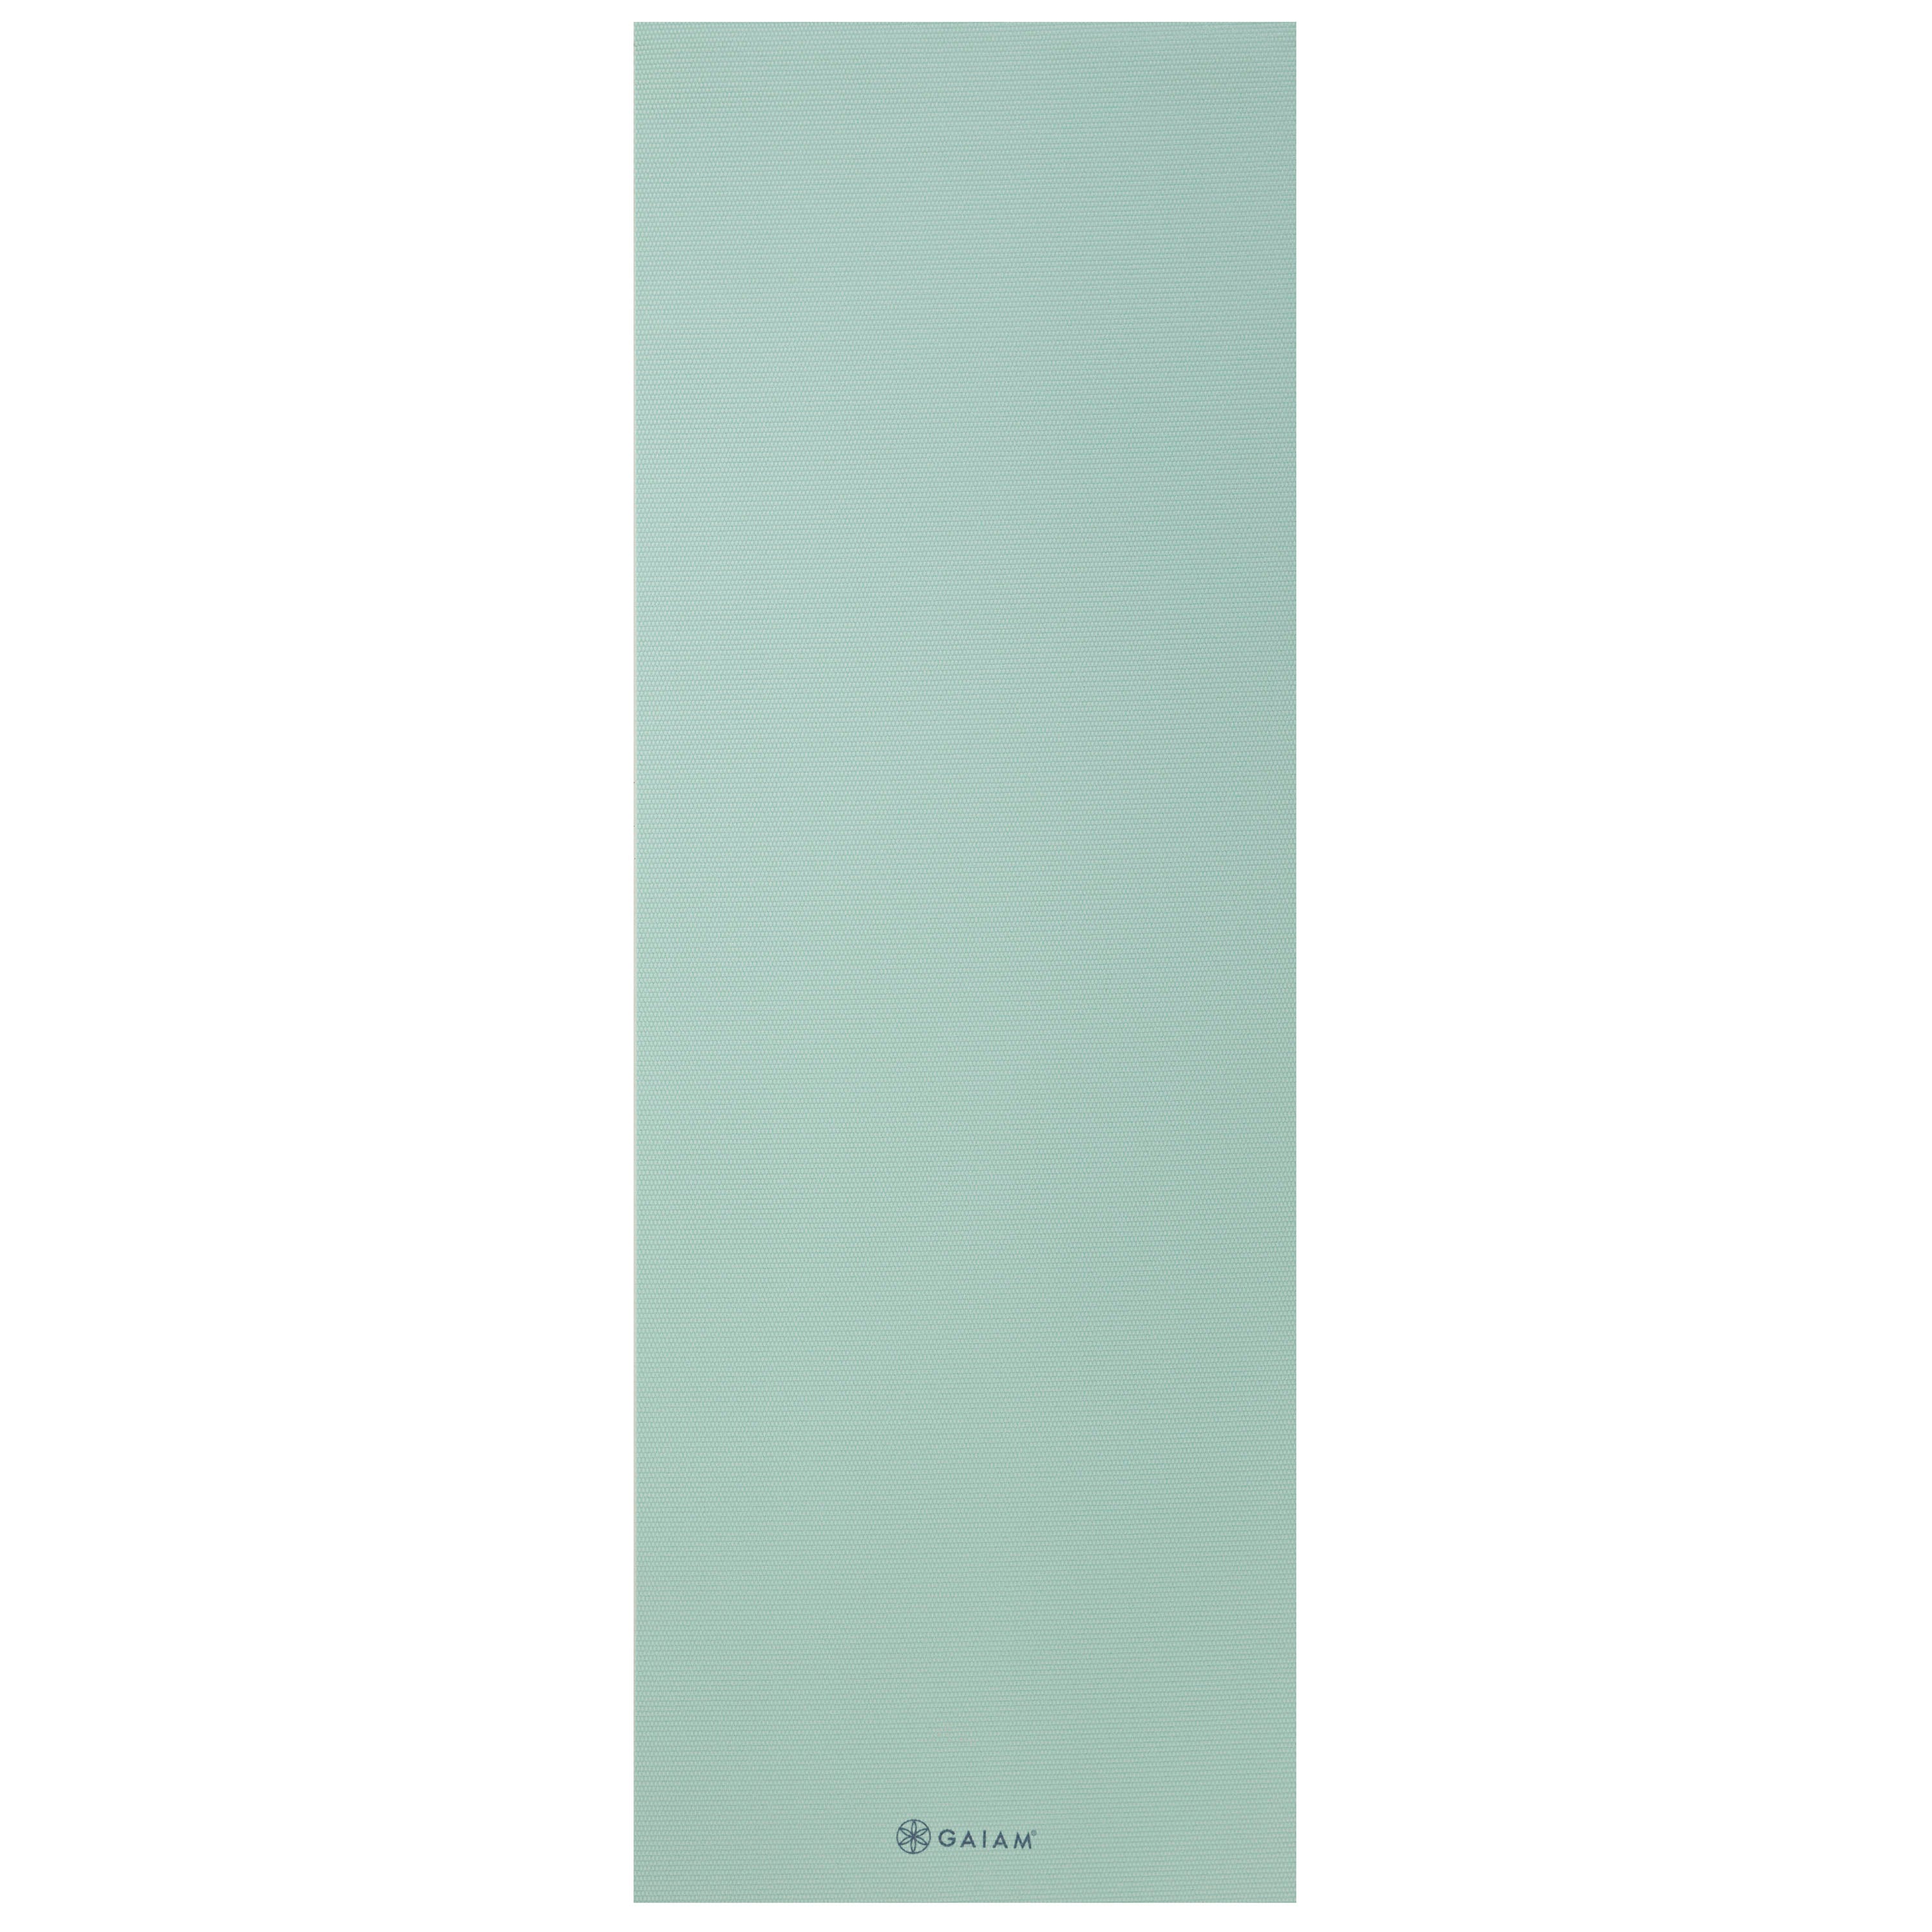 Gaiam Classic Solid Color Yoga Mats (5mm) Morning Dew flat